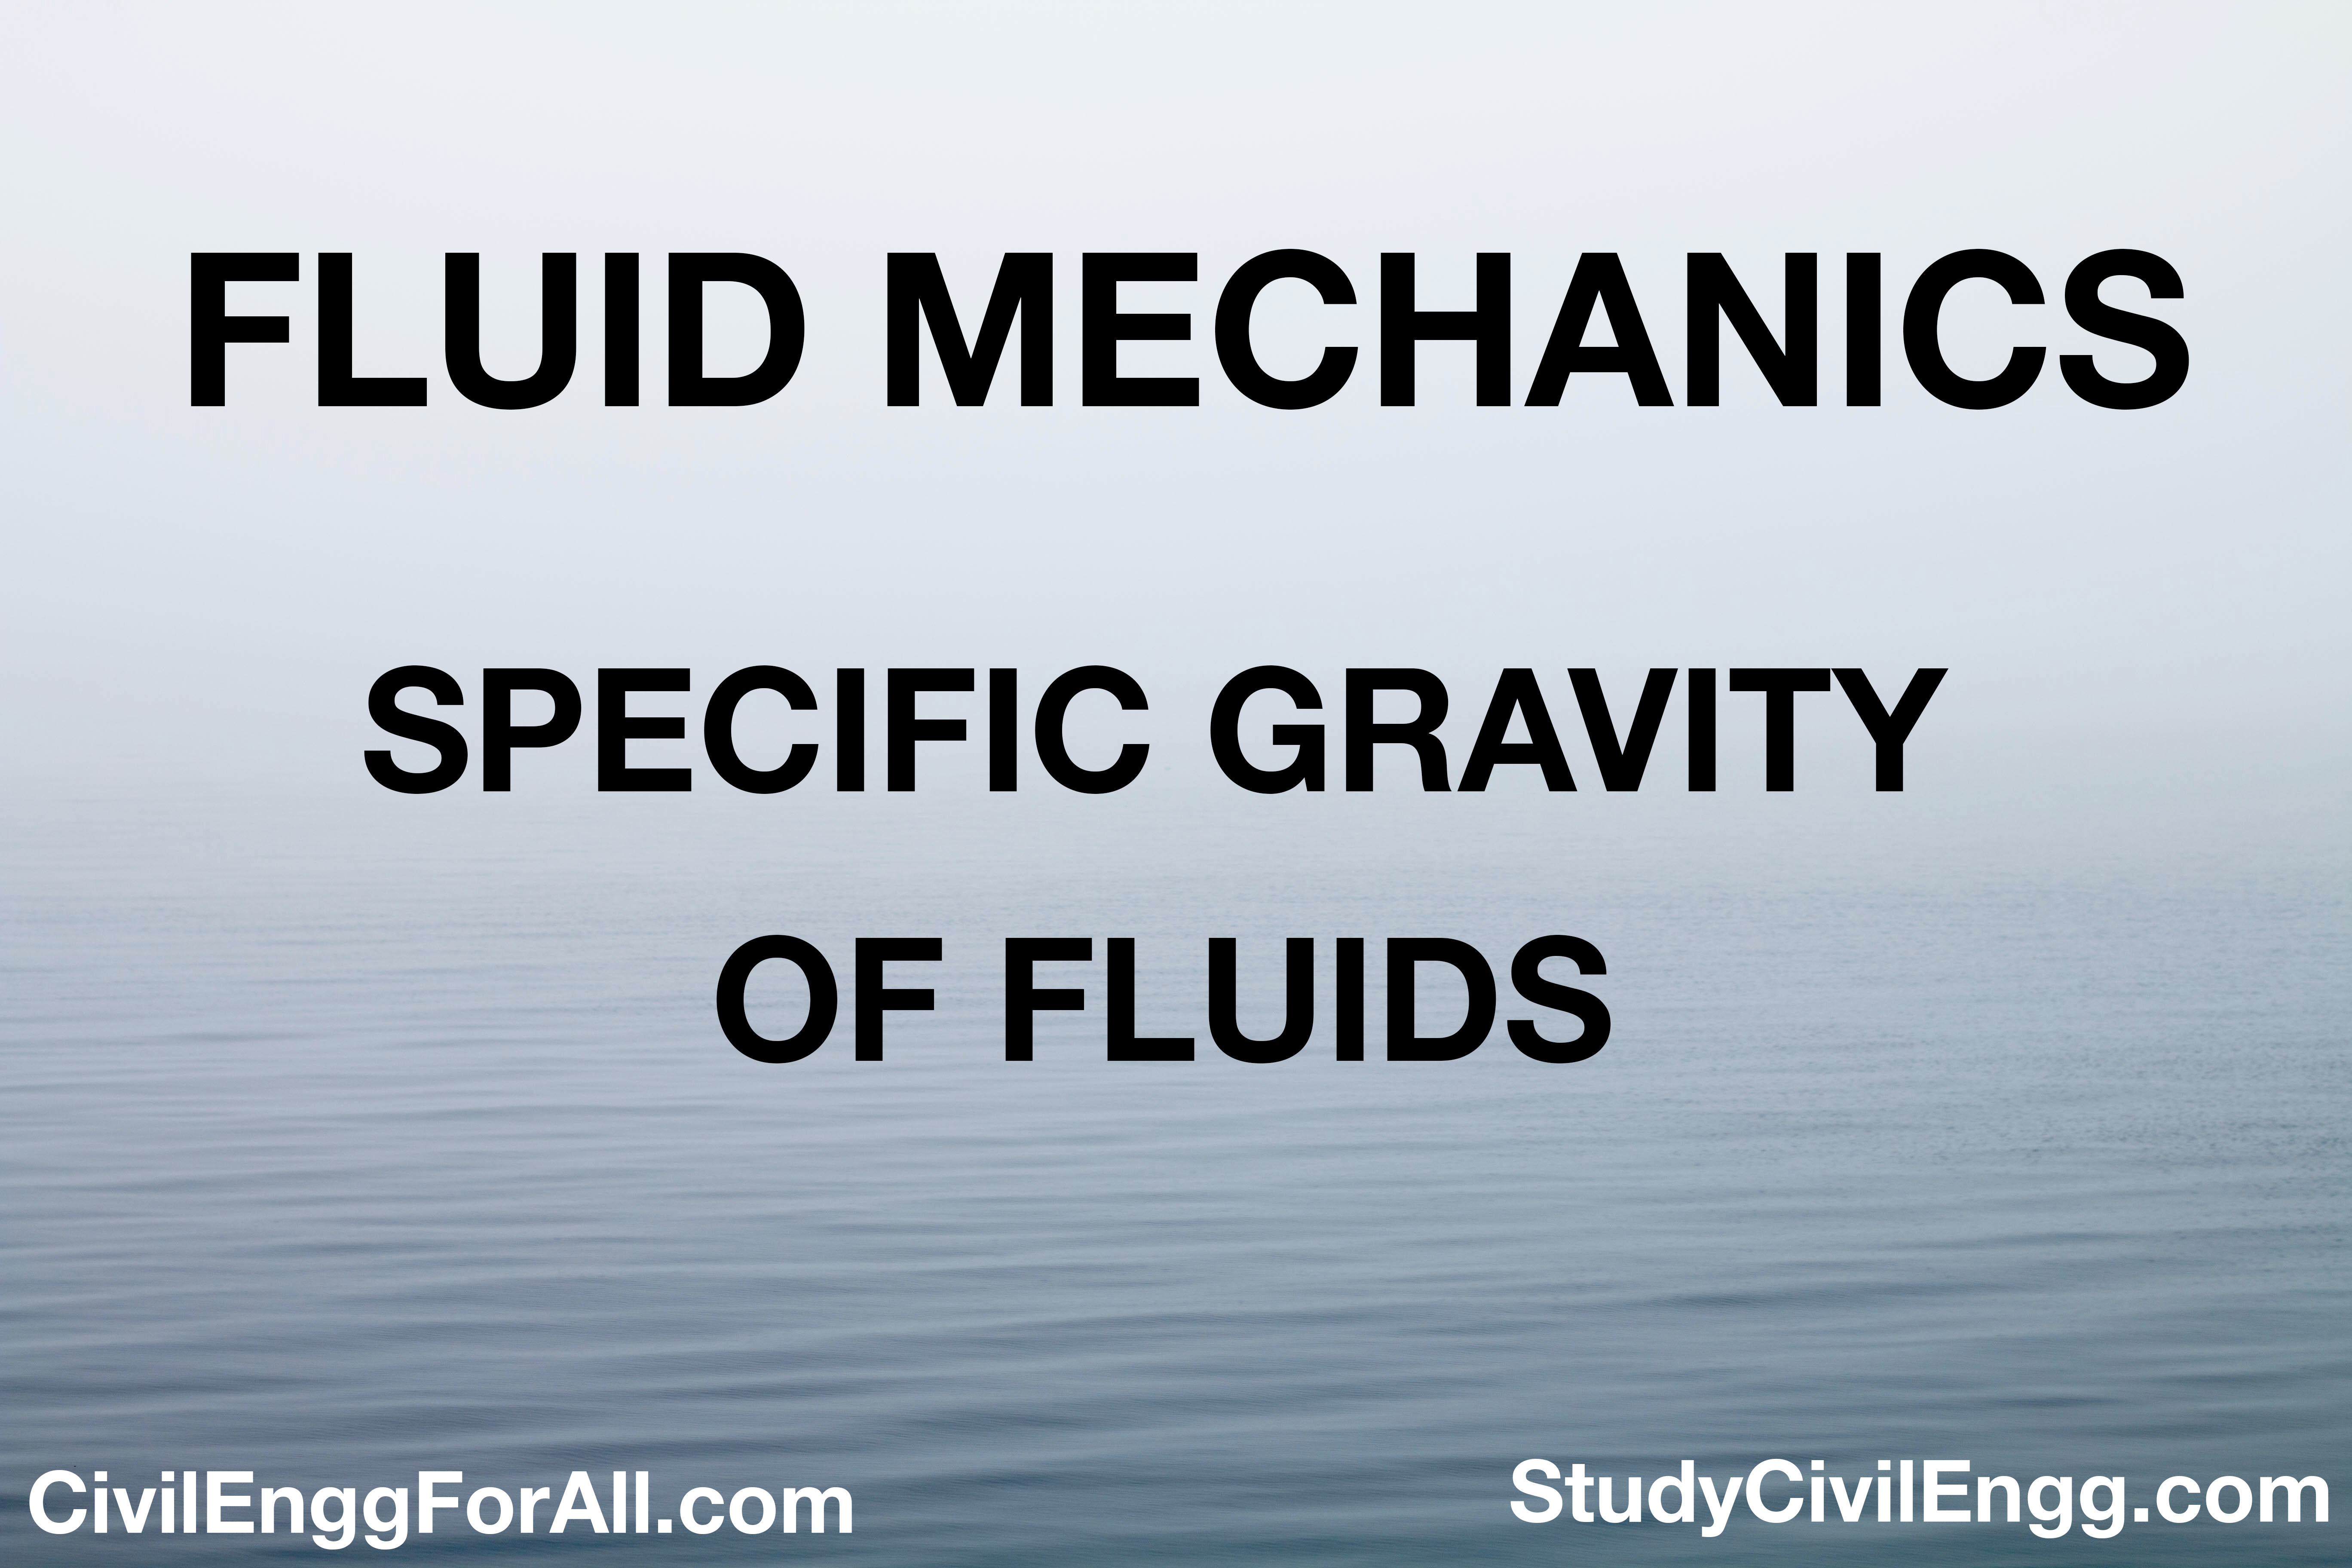 Specific Gravity - Fluid Mechanics - StudyCivilEngg